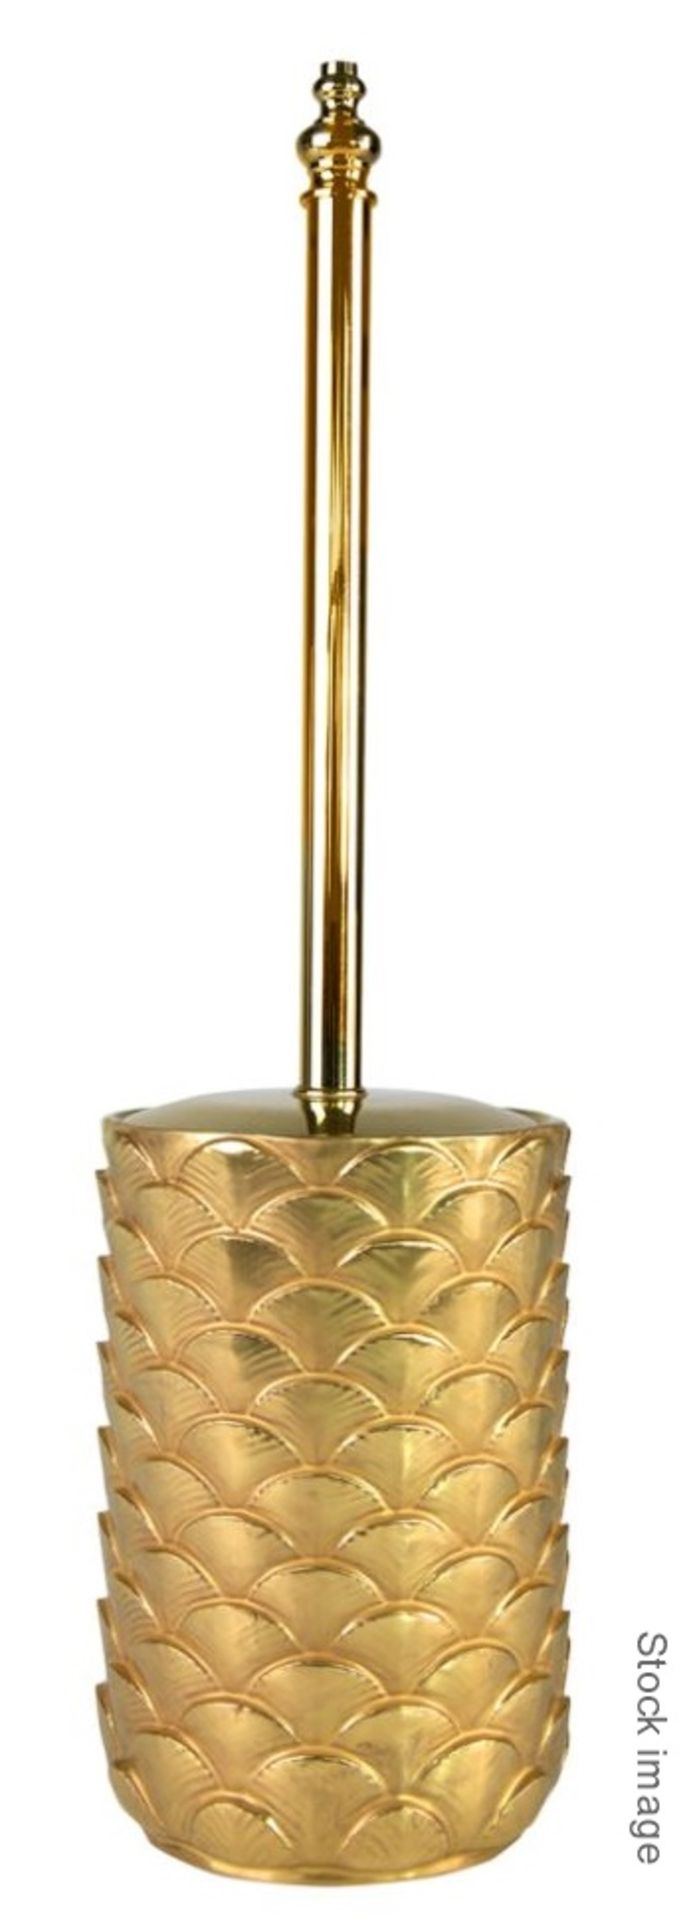 1 x VILLARI 'Peacock' Opulent 24-karat Gold Decorated Porcelain Toilet Brush Holder - RRP £459.00